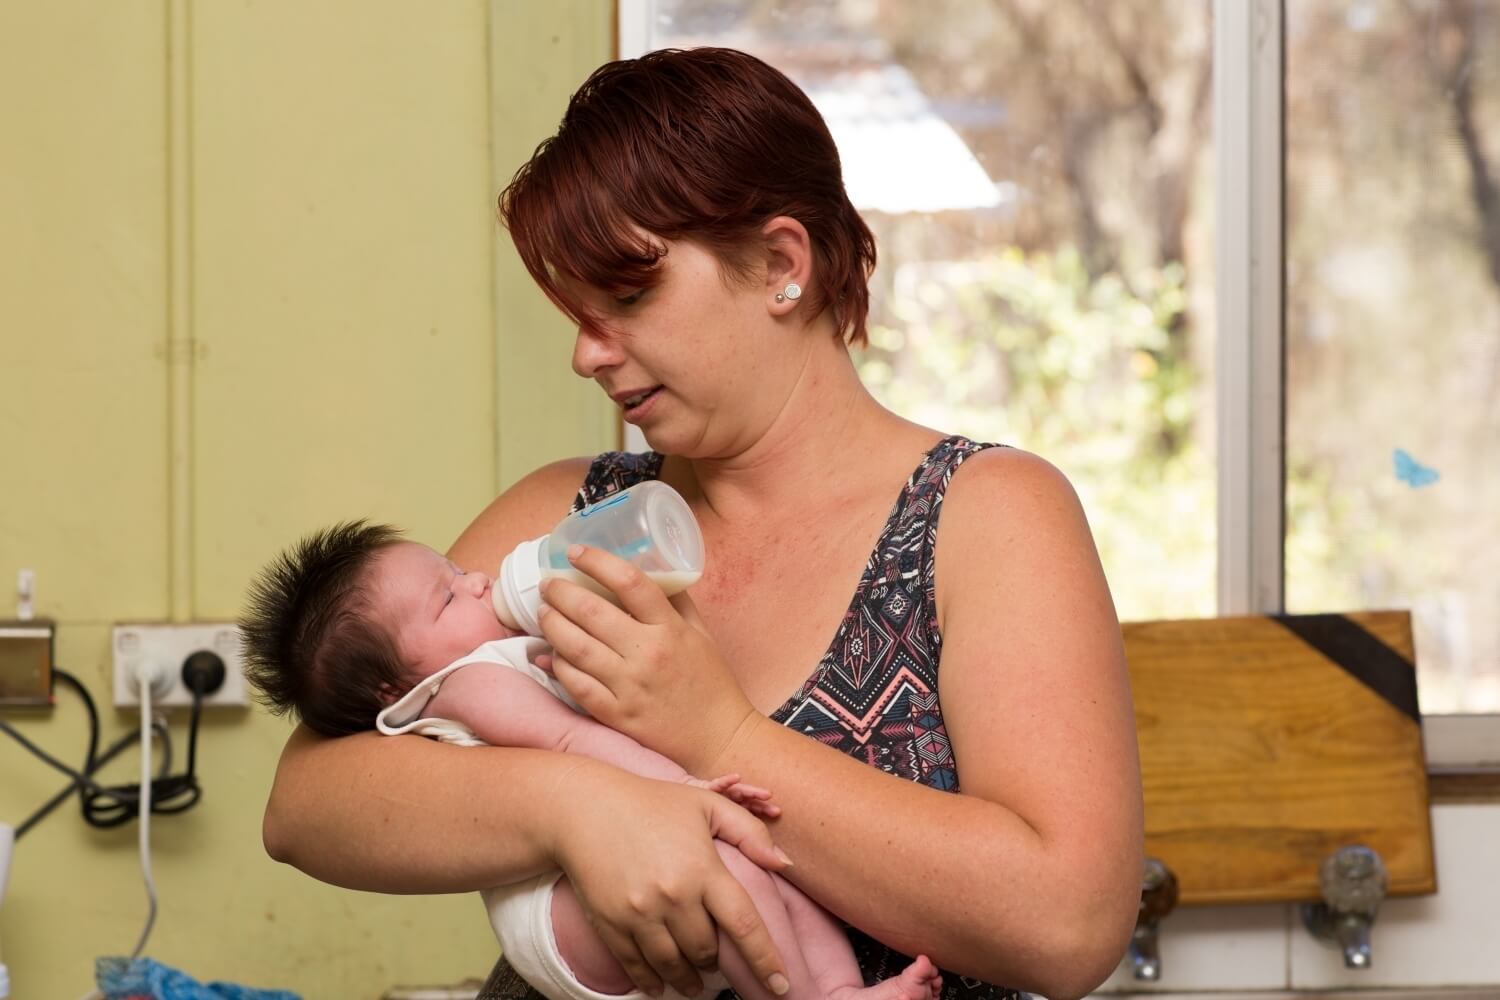 A mother bottle feeding her newborn baby